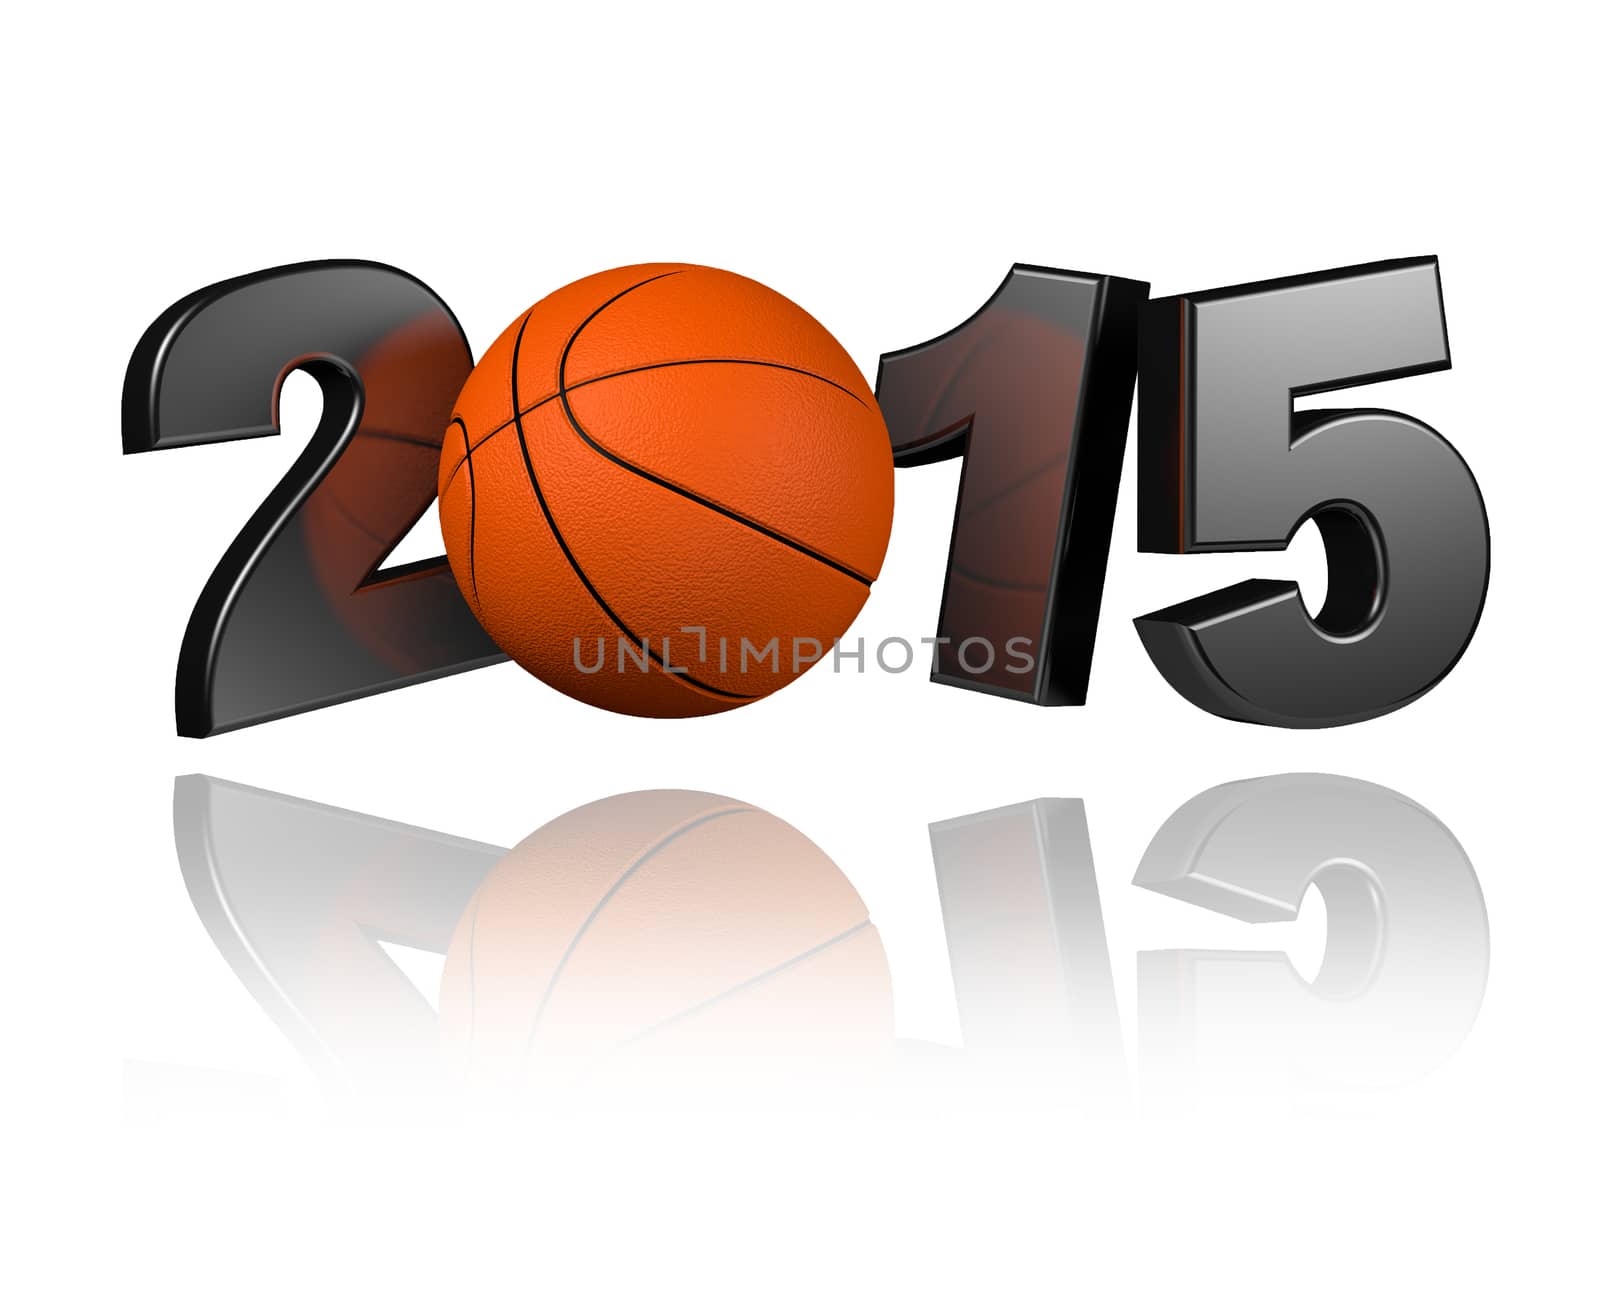 Basketball 2015 design by shkyo30